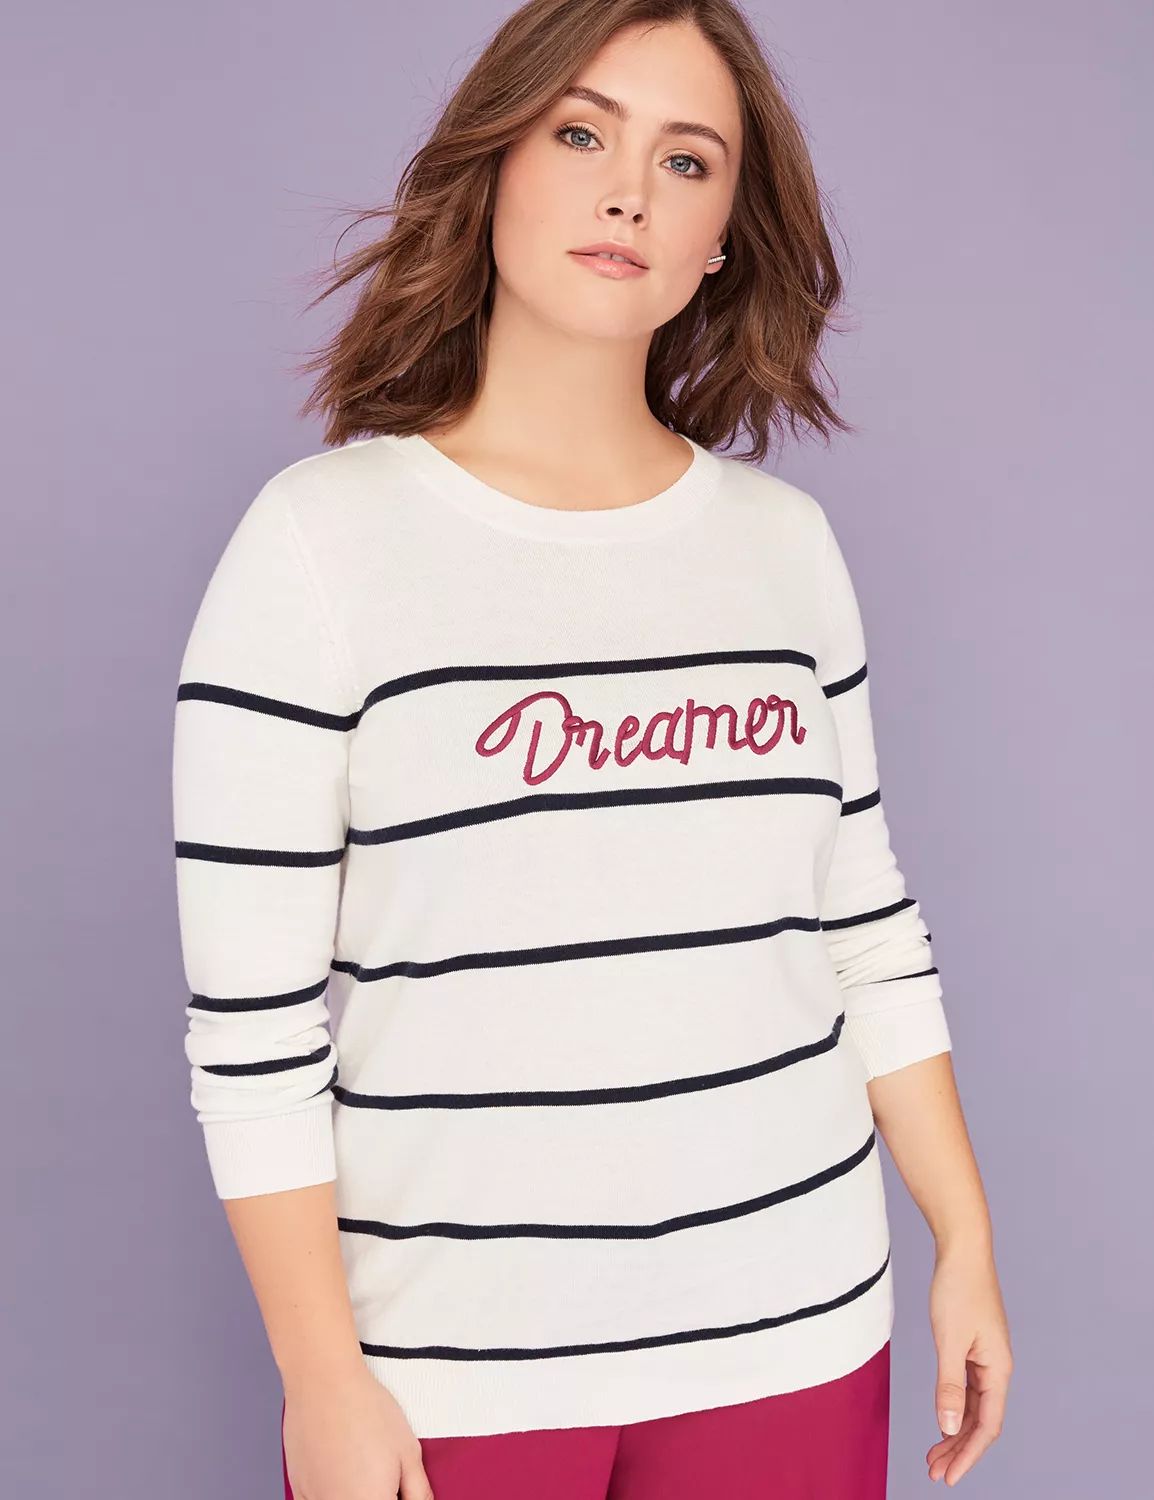 Lane Bryant Women's Dreamer Graphic Sweater 10/12P Stripes | Lane Bryant (US)